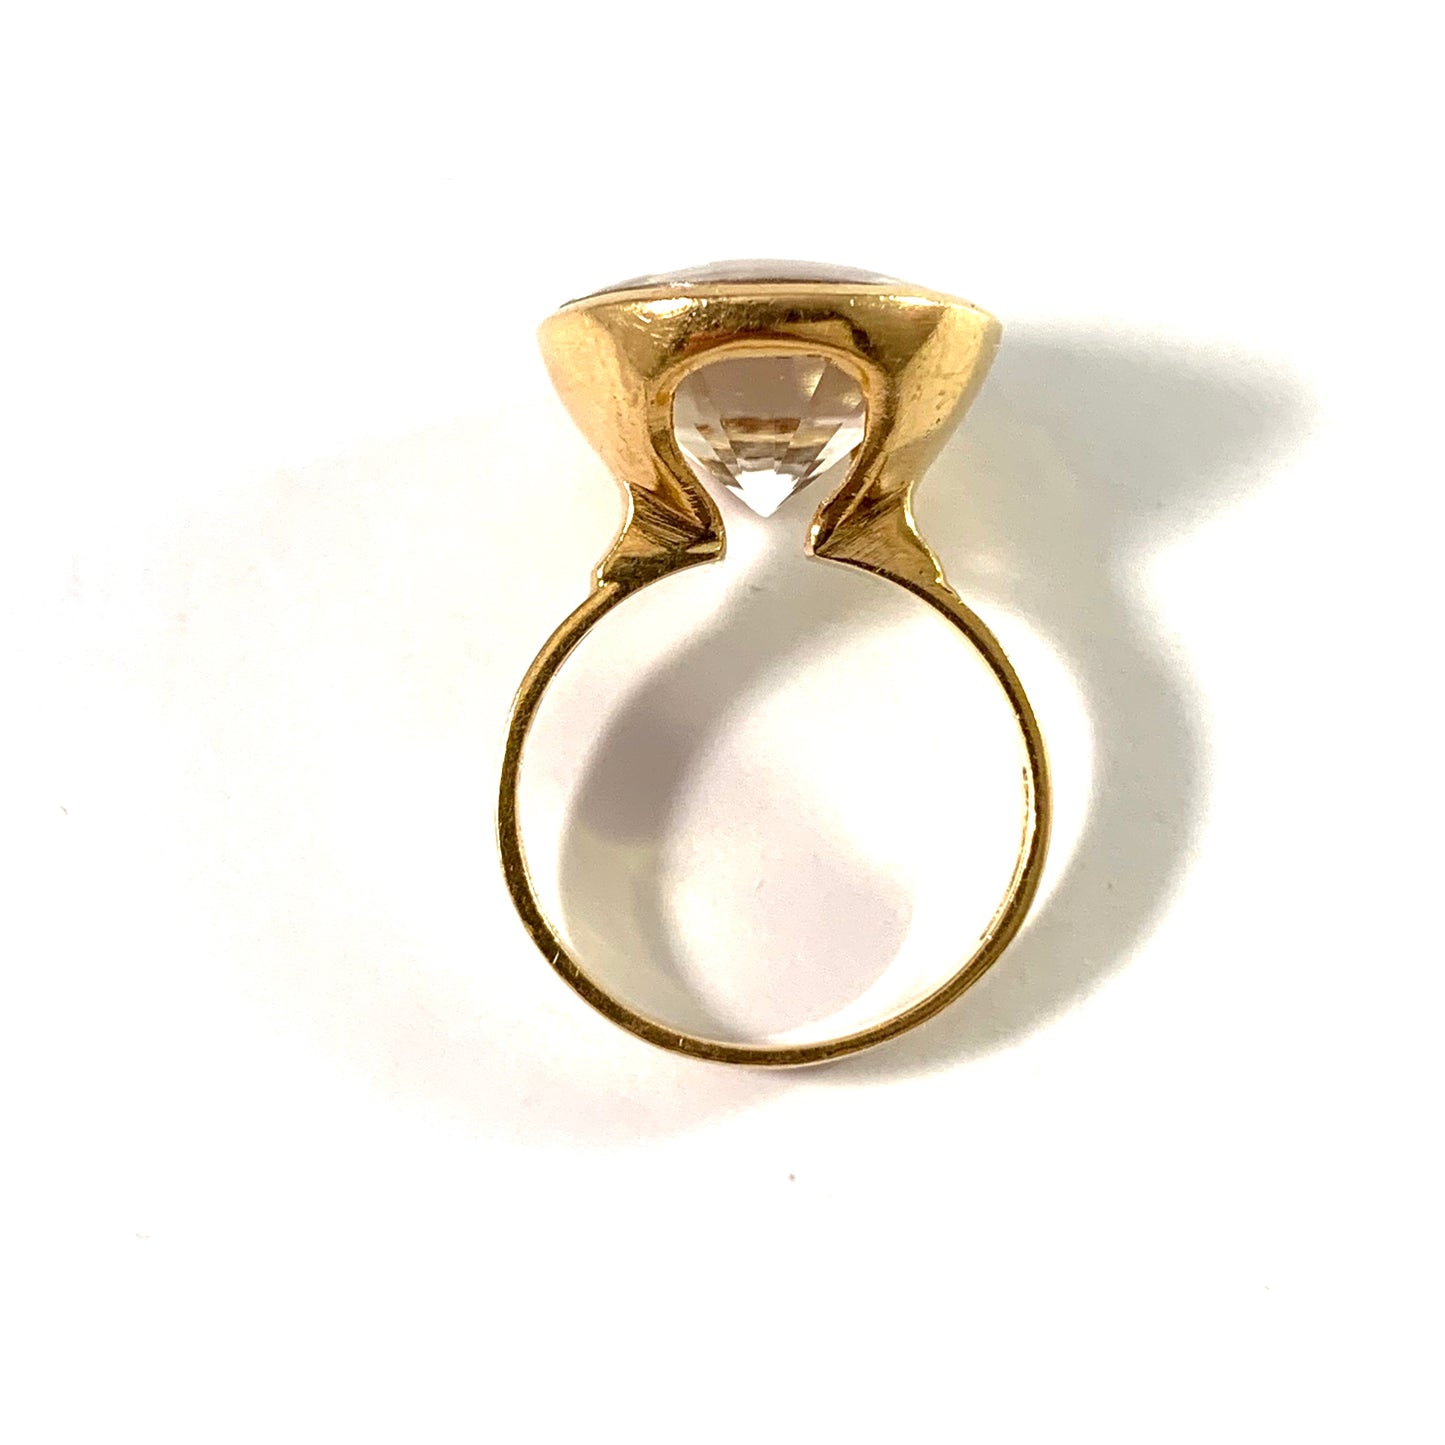 Atelje Stigbert, Sweden 1968. Modernist 18k Gold Rock Crystal Ring.